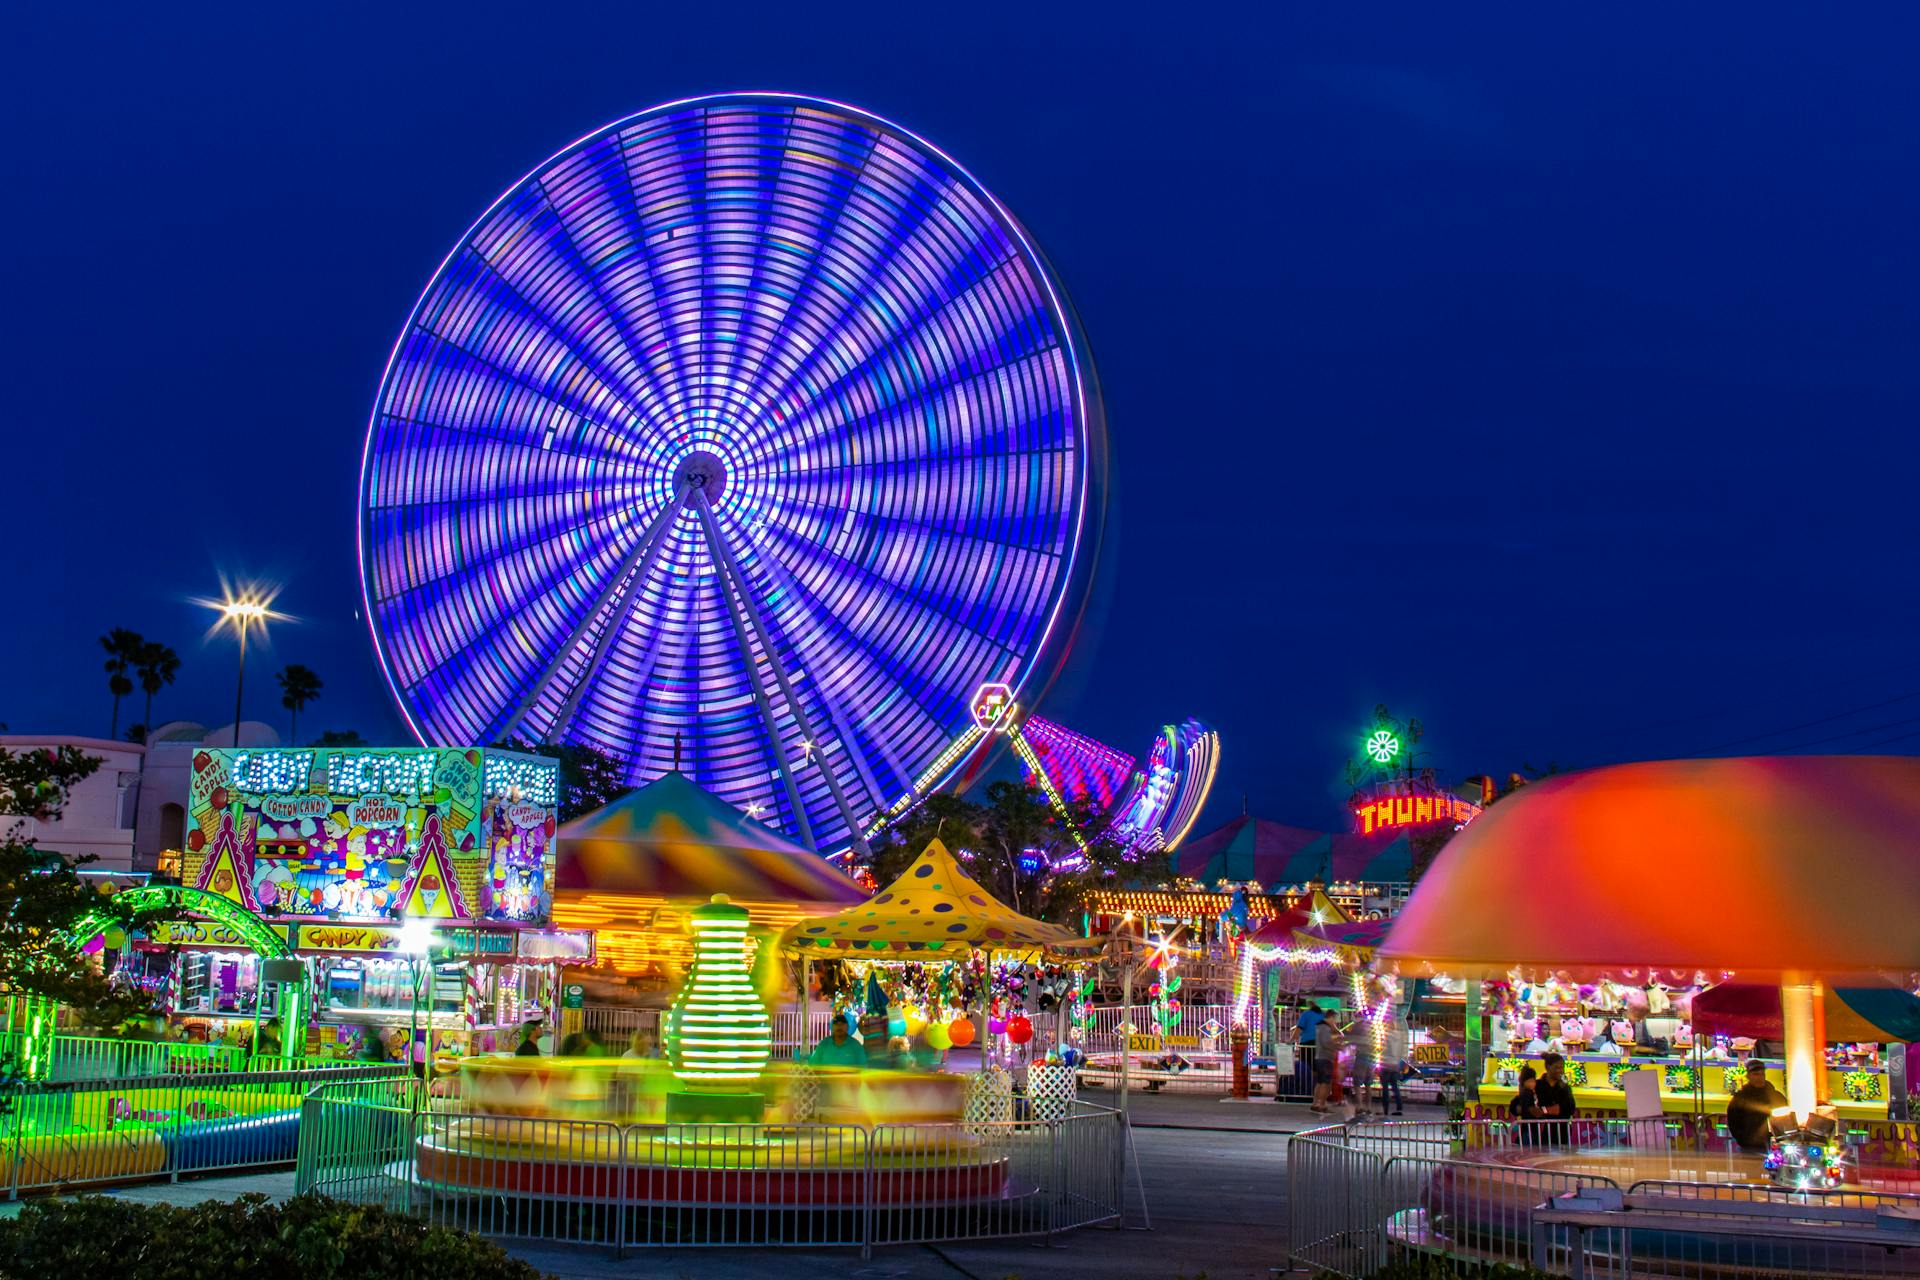 An Amusement Park At Night